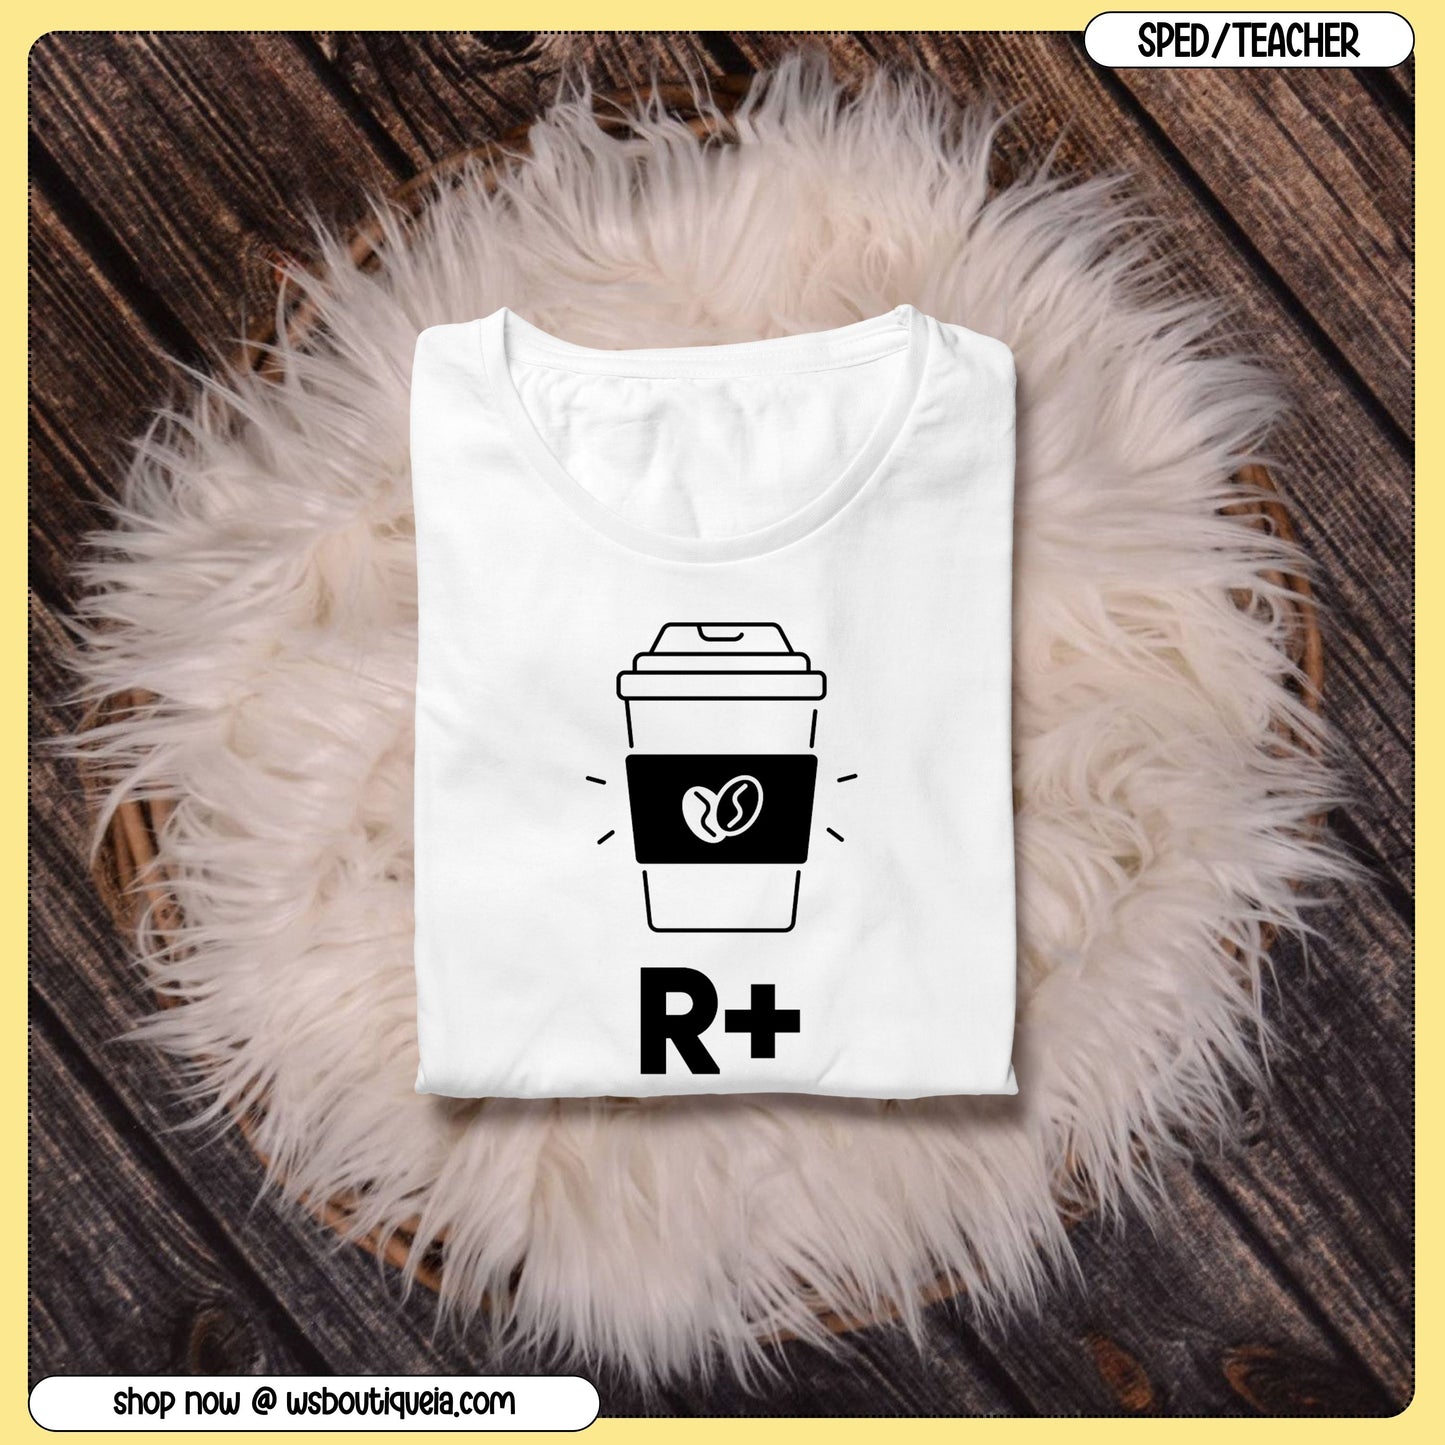 R+ Coffee Special Education Tee/Sweatshirt